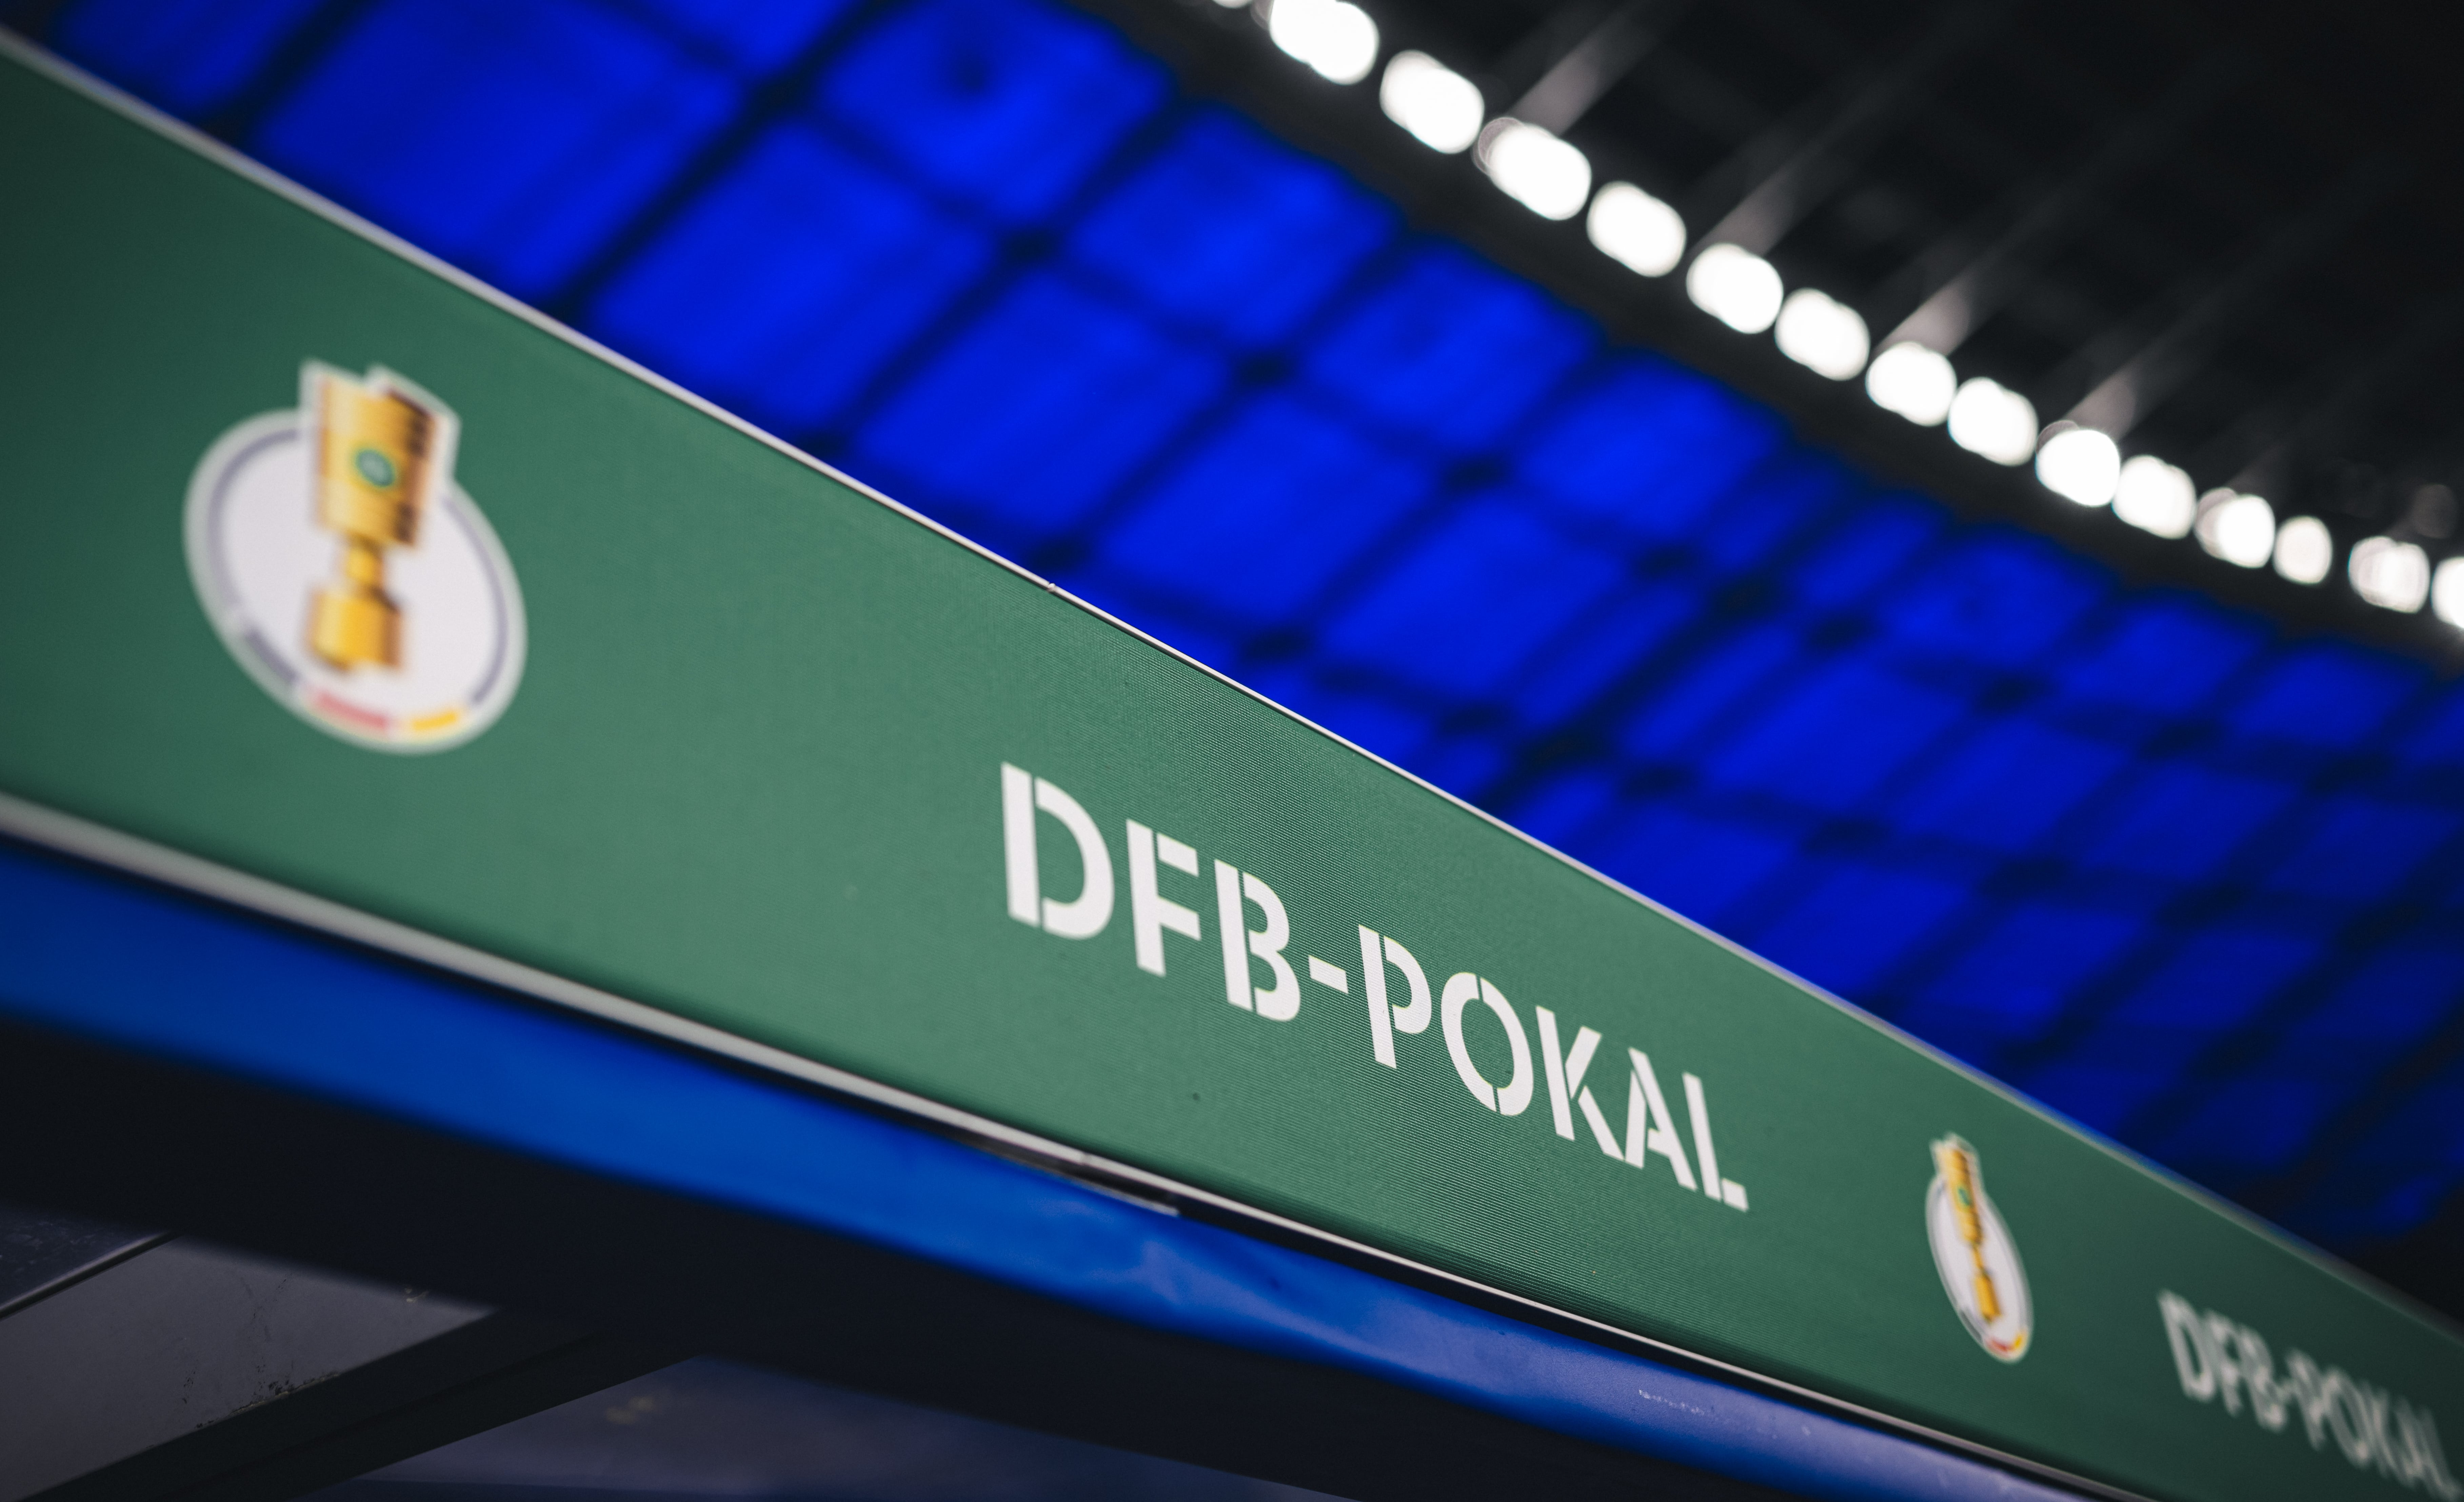 DFB-Pokal-Schriftzug im Olympiastadion.